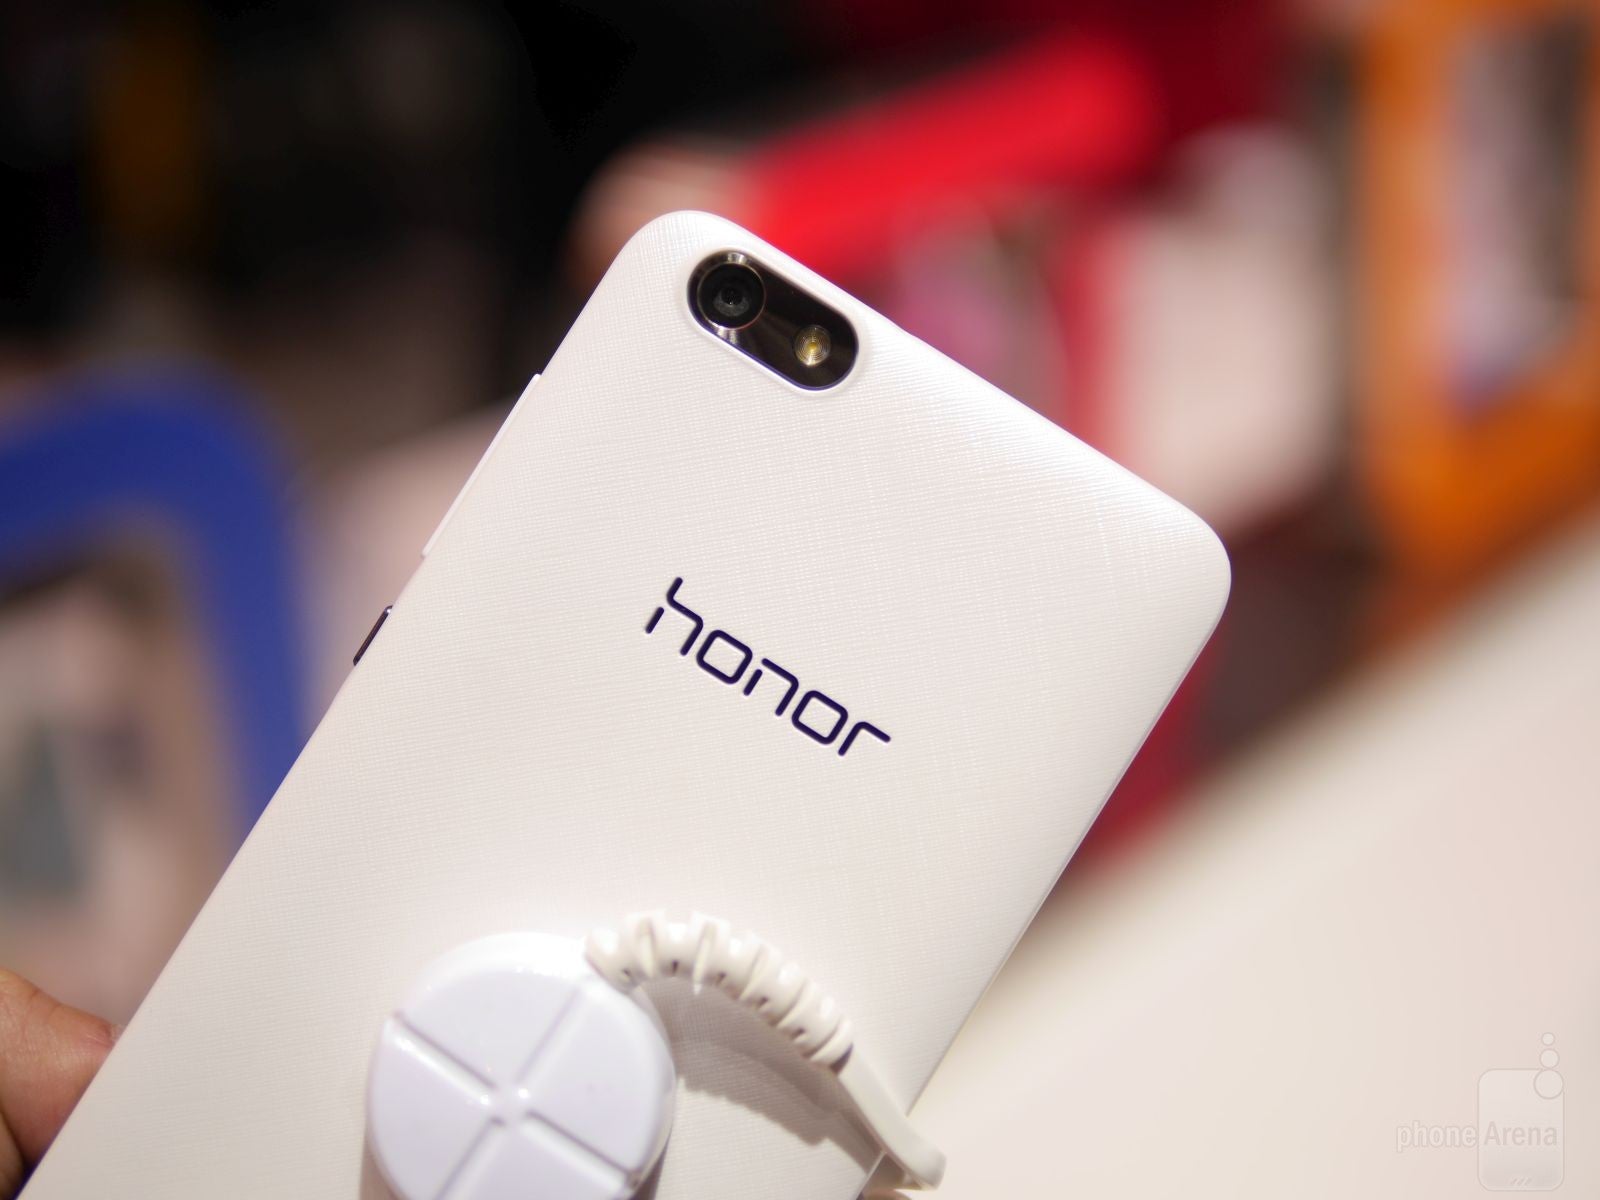 Huawei Honor 4X hands-on - PhoneArena